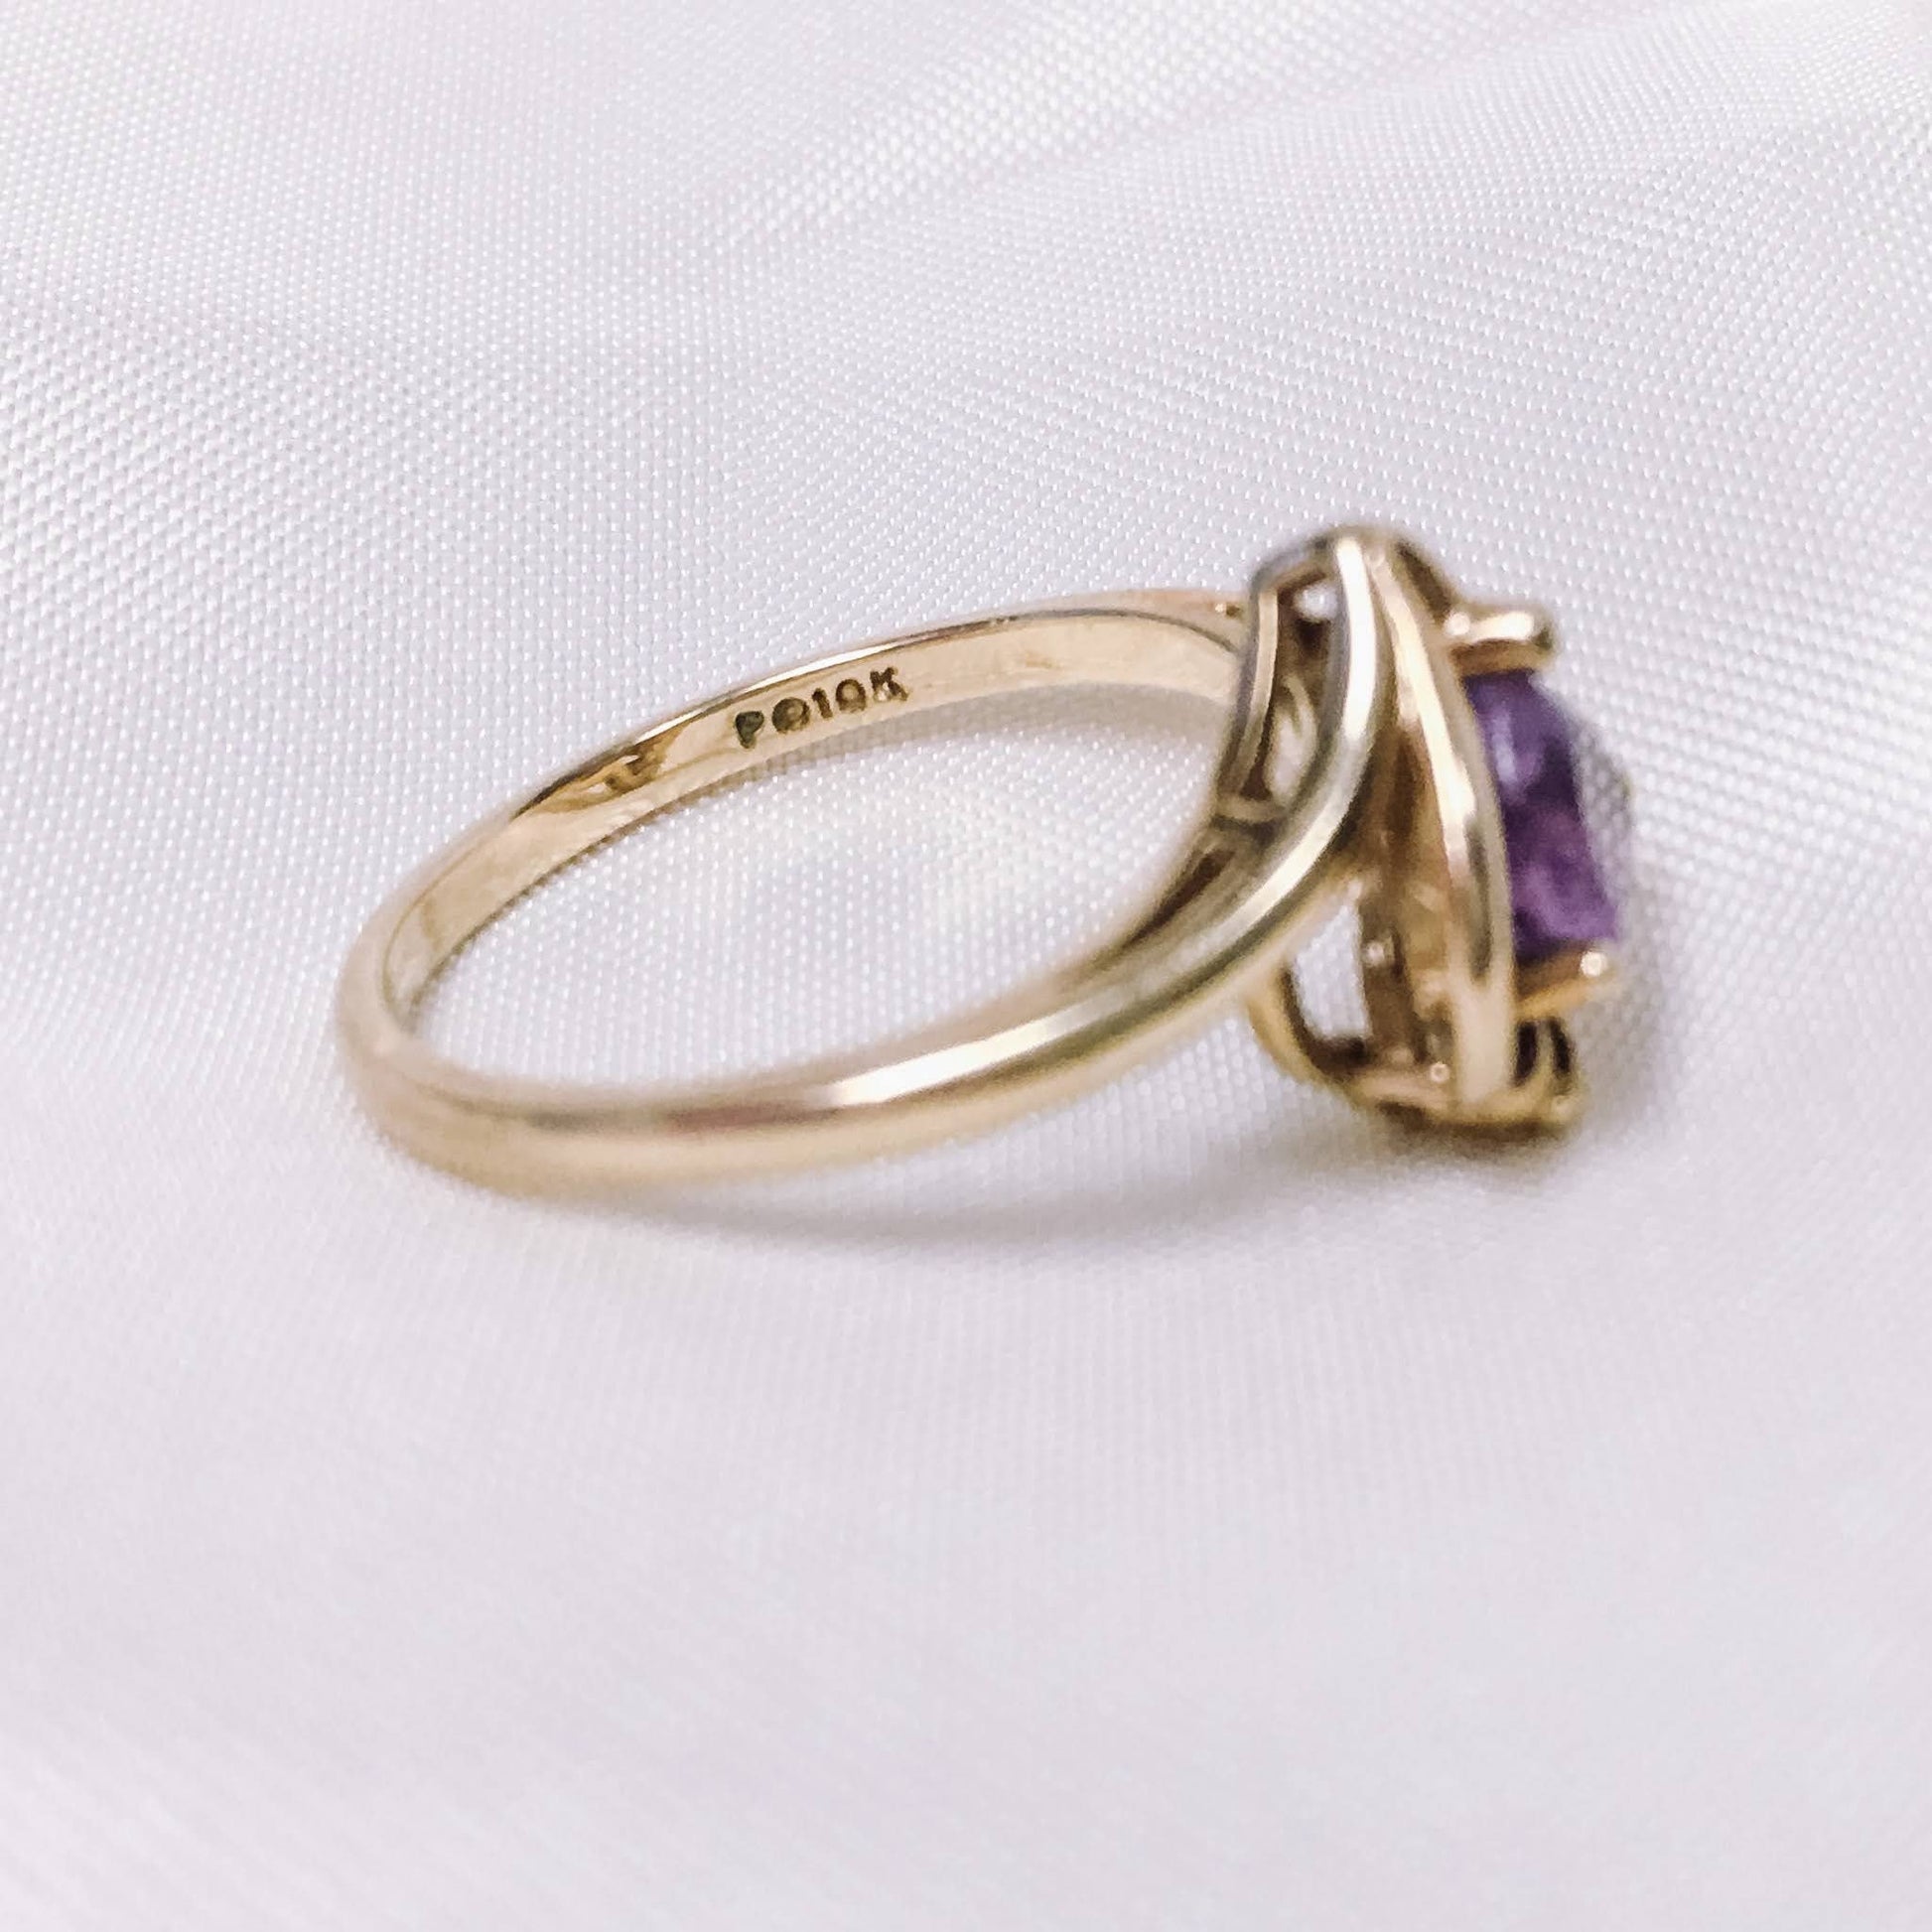 Vintage 1980's 10k Amethyst Heart Ring, Vintage Gold Engagement/Promise Ring, Size 6